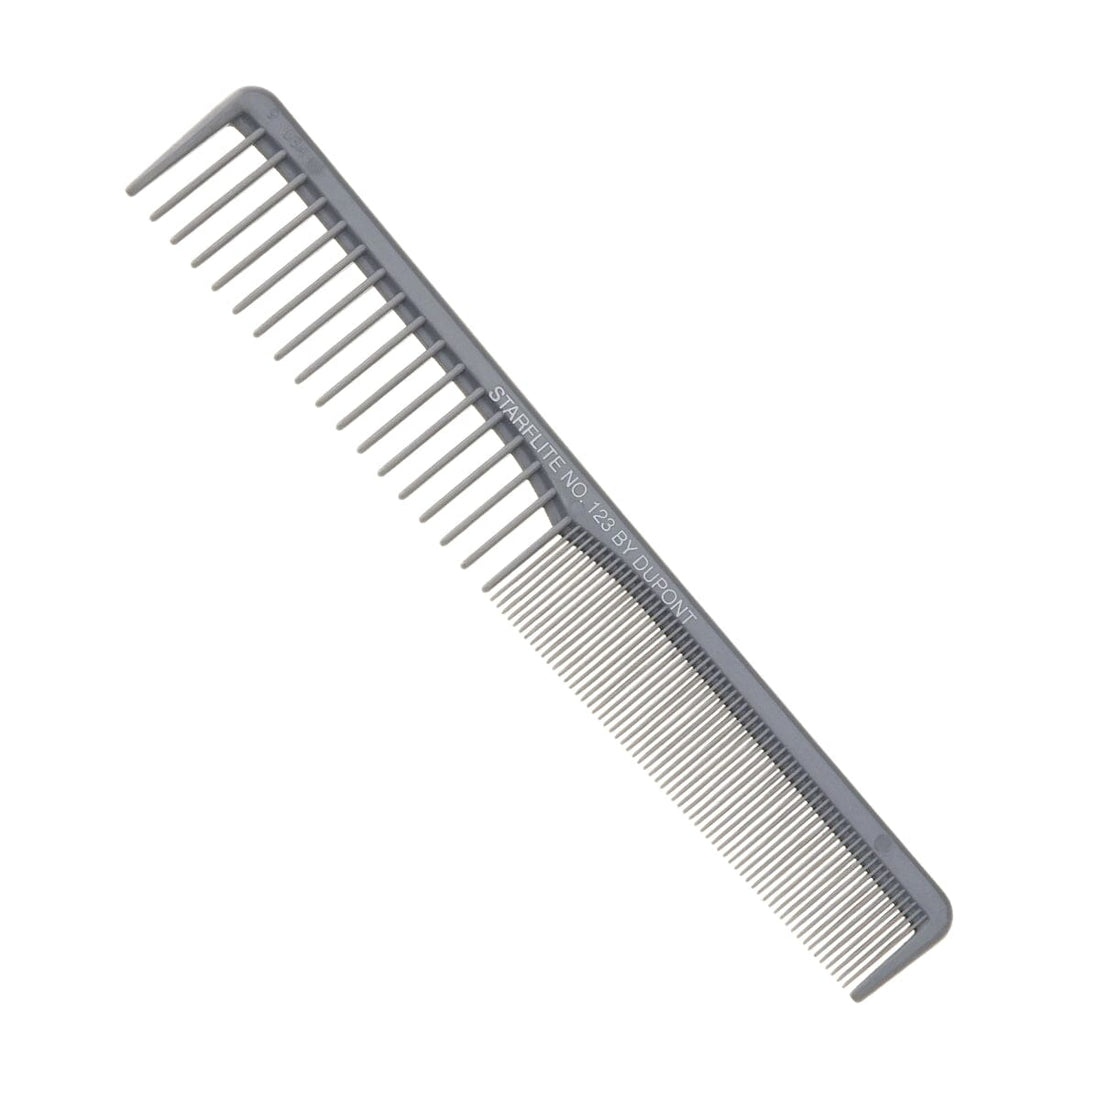 HairMNL Denman Vent Styler Comb